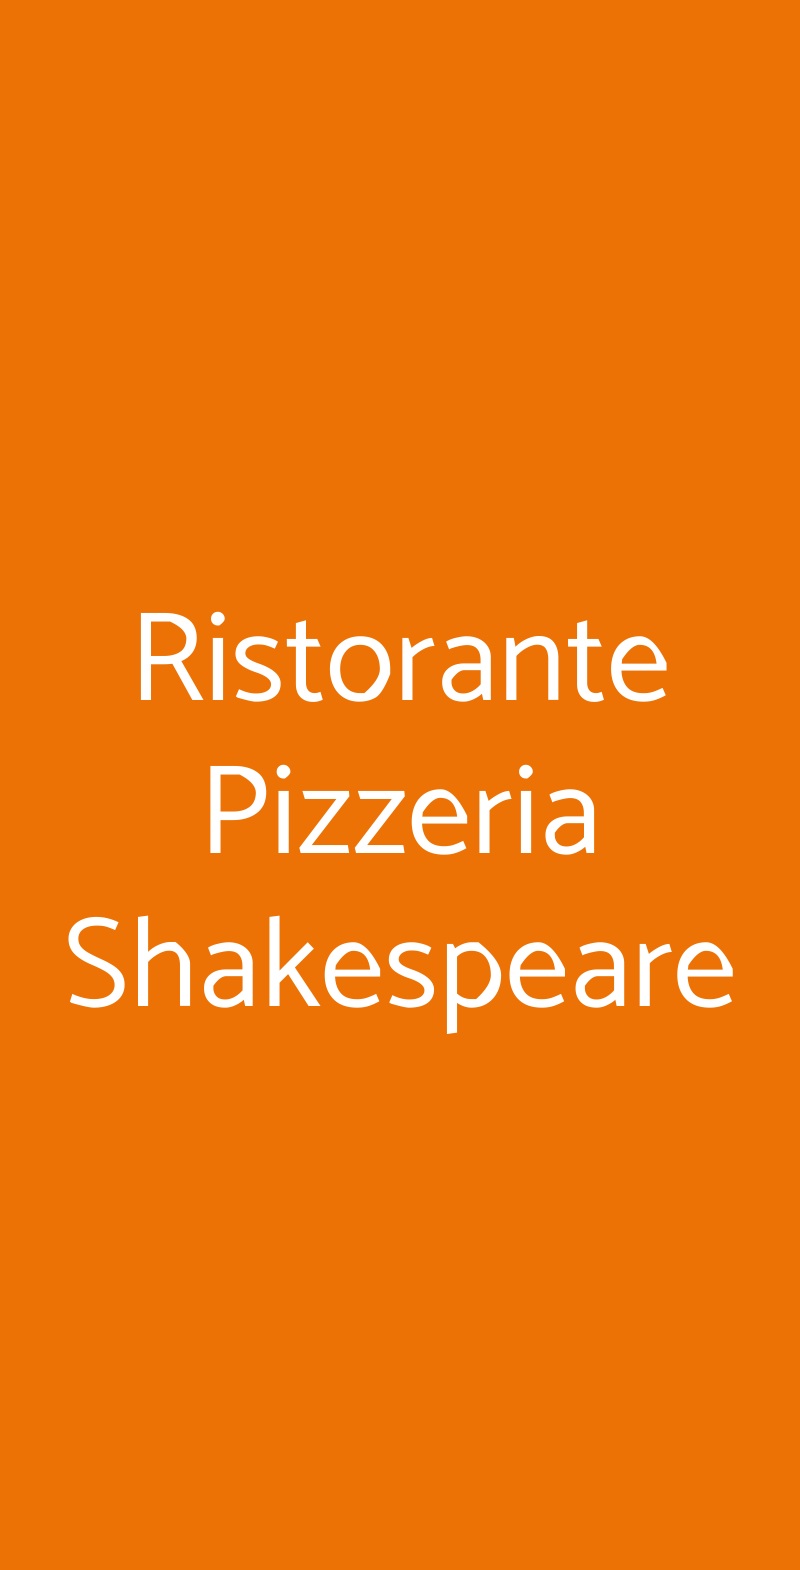 Ristorante Pizzeria Shakespeare Verona menù 1 pagina